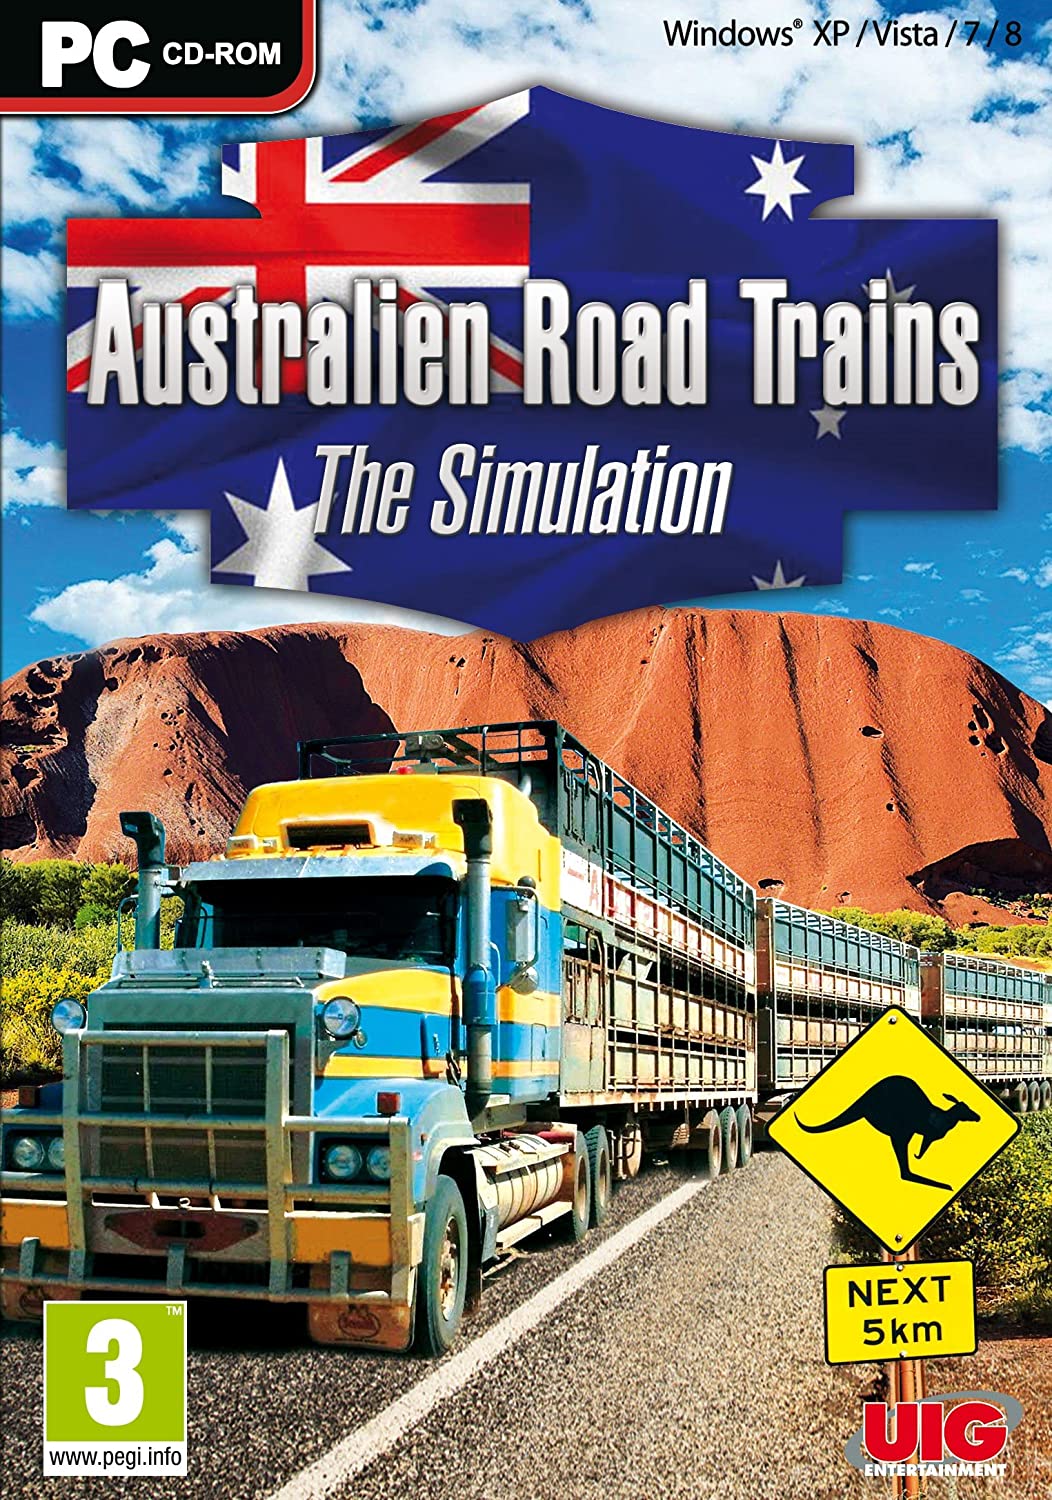 Australian Road Trains PC CD-ROM